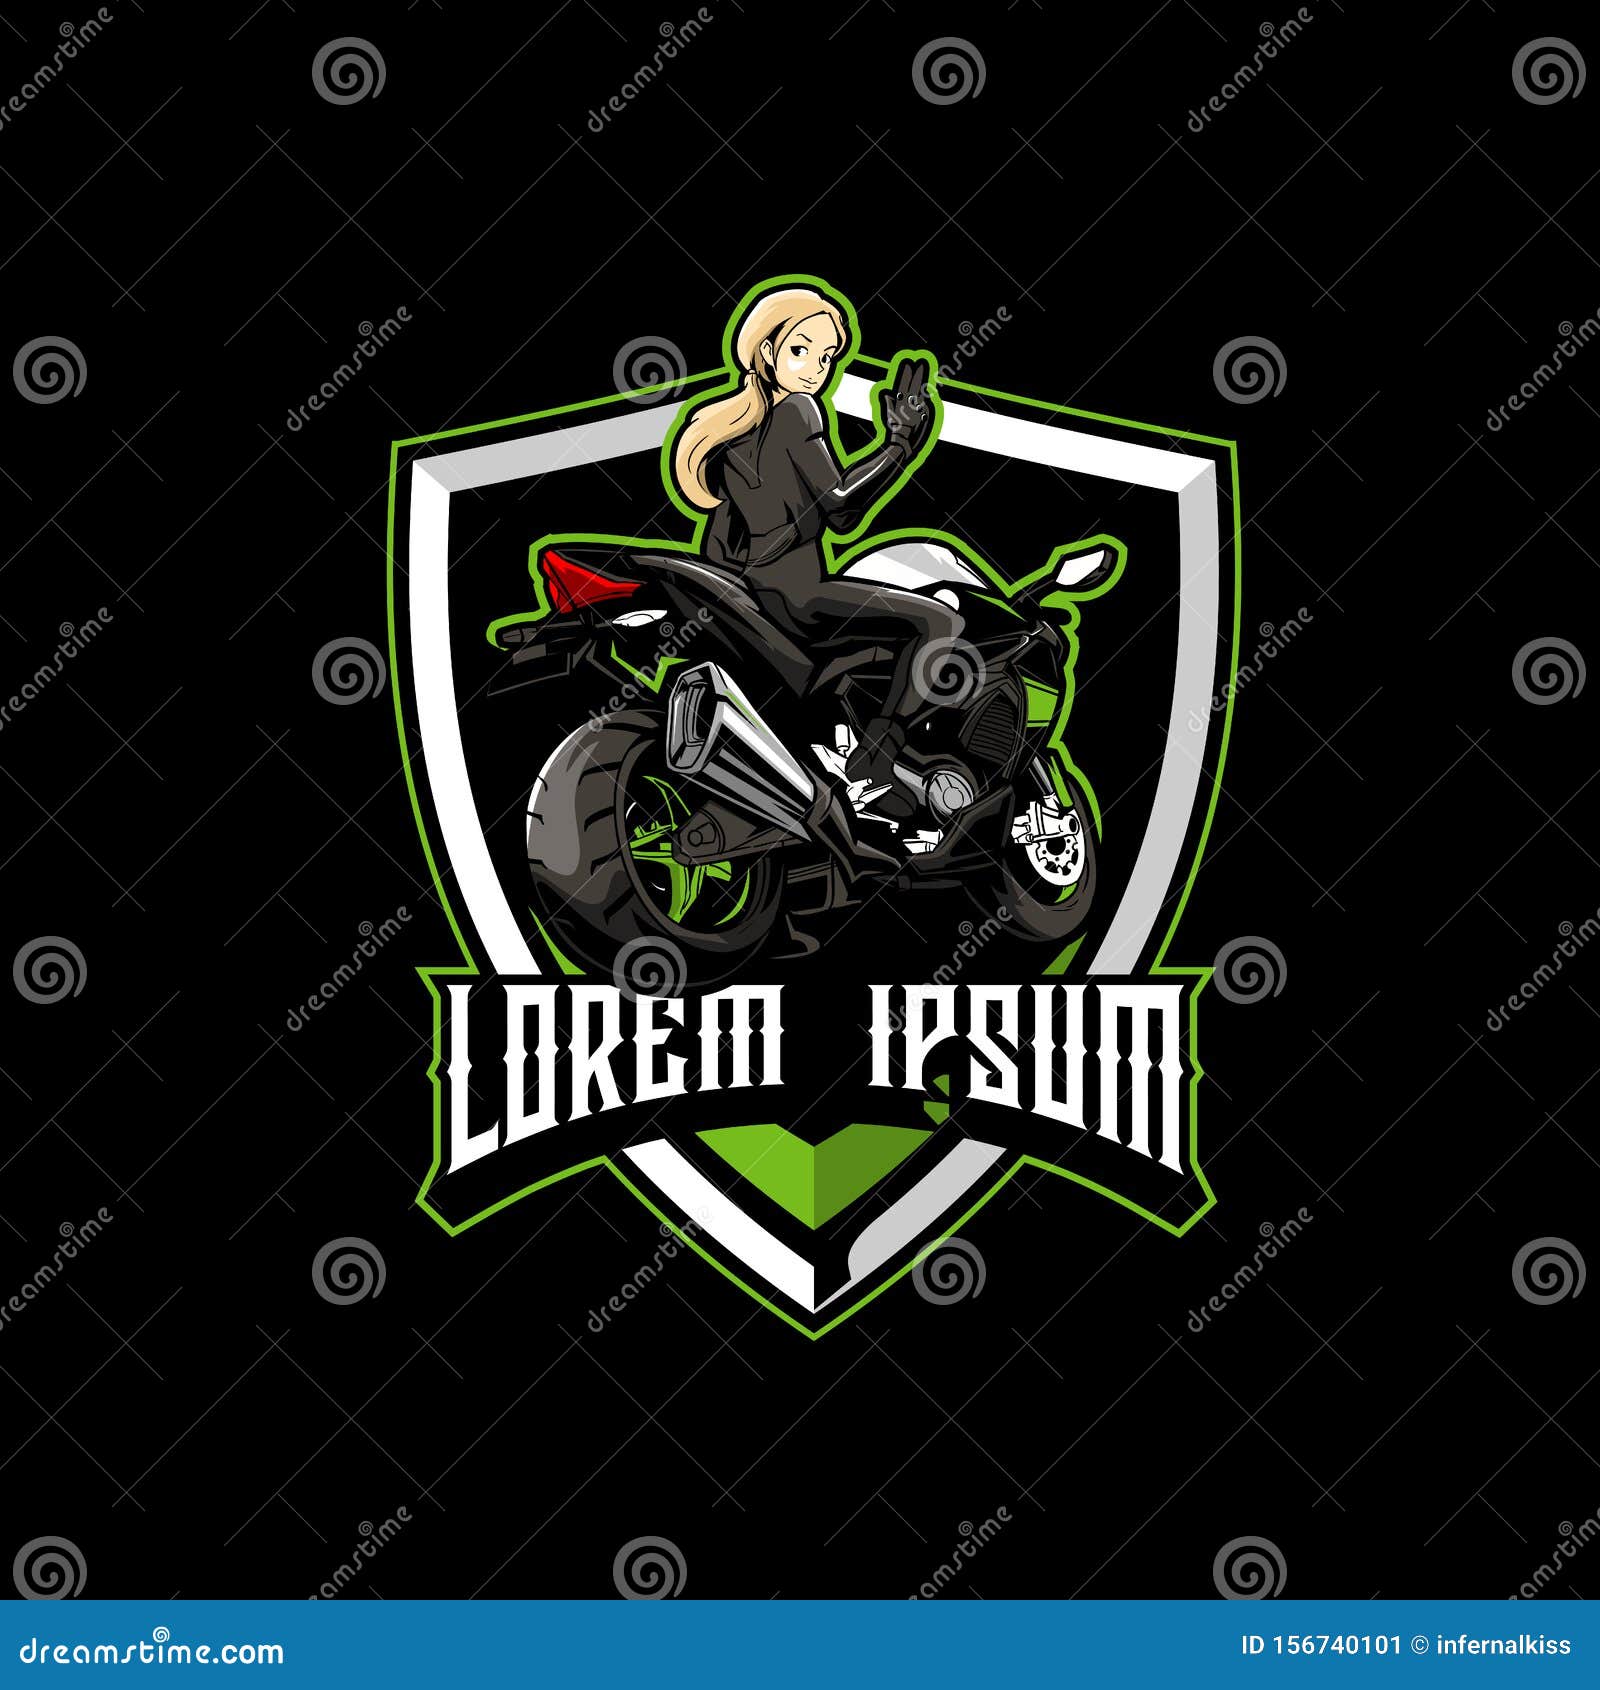 women on sport motorbikes cartoon character  badge logo template